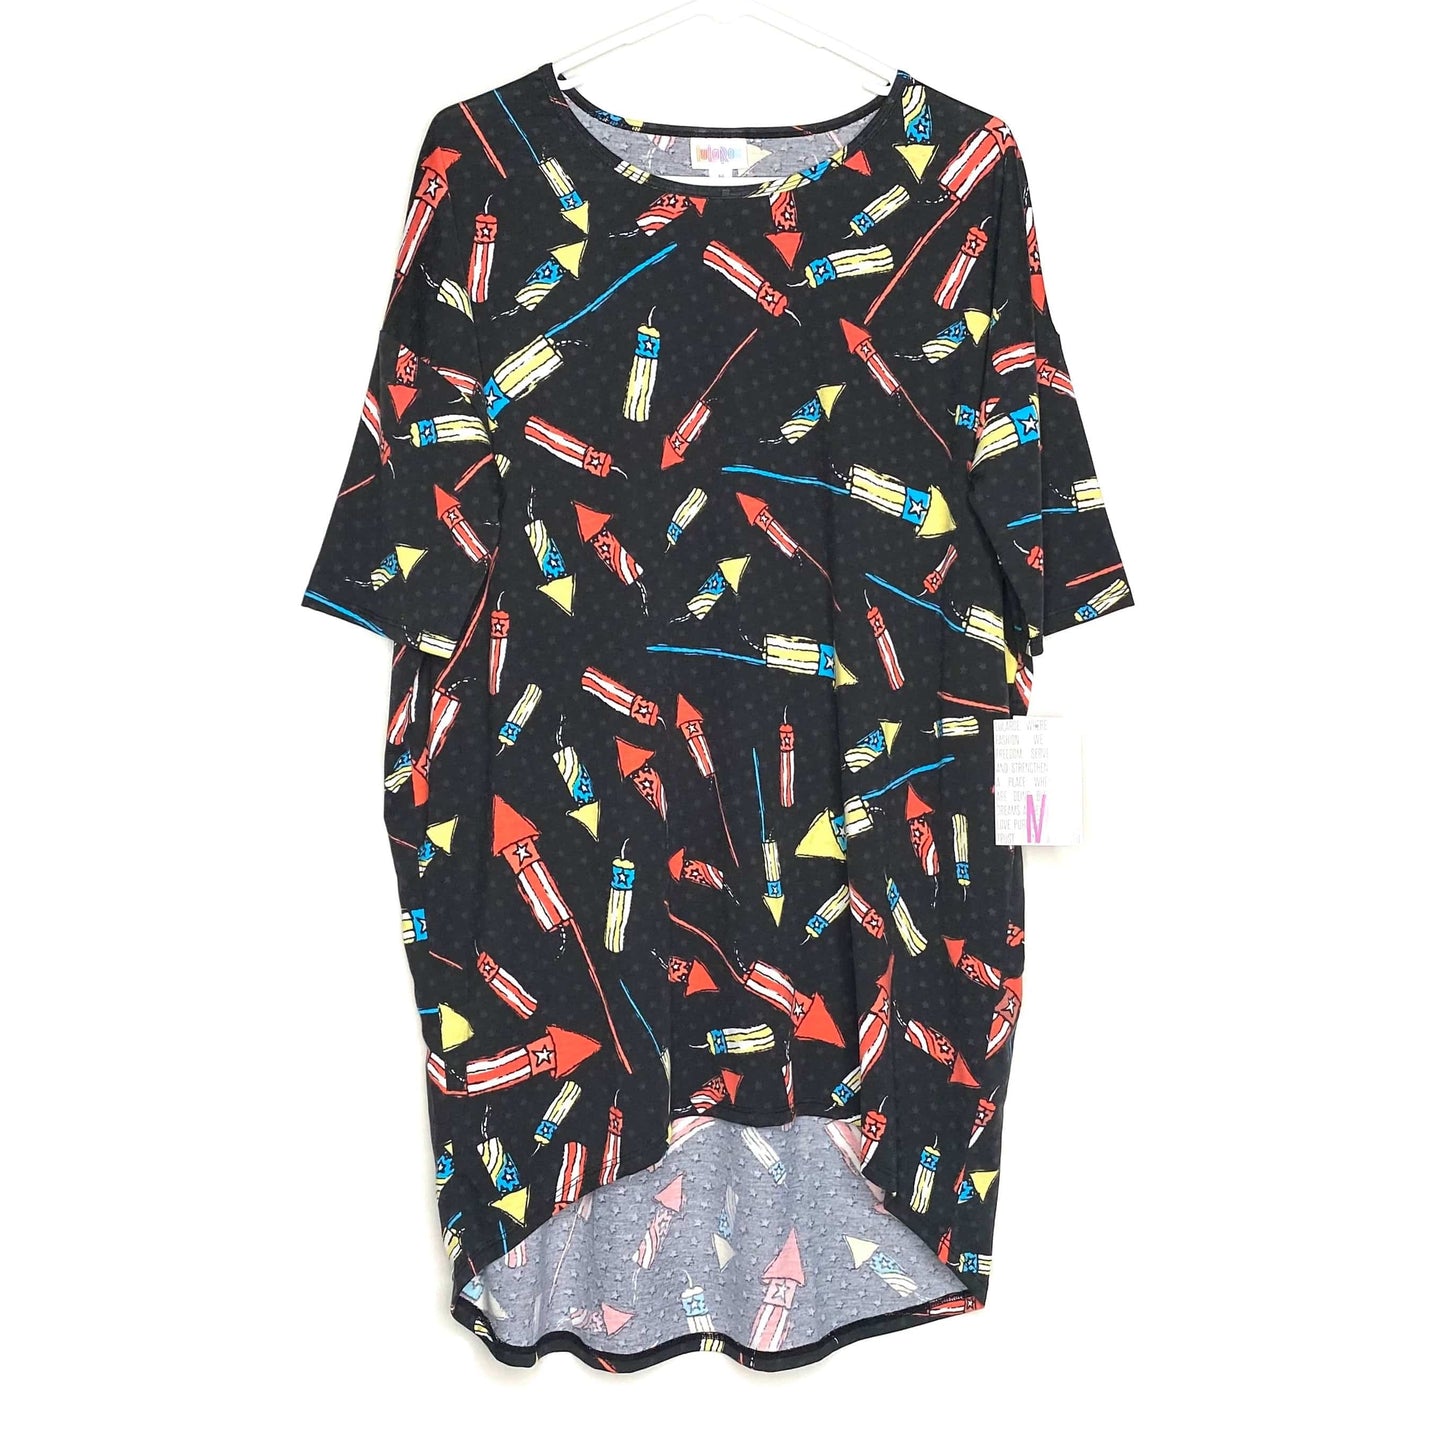 LuLaRoe Womens Size M Irma Charcoal Gray/Multicolor Fireworks T-Shirt S/s NWT